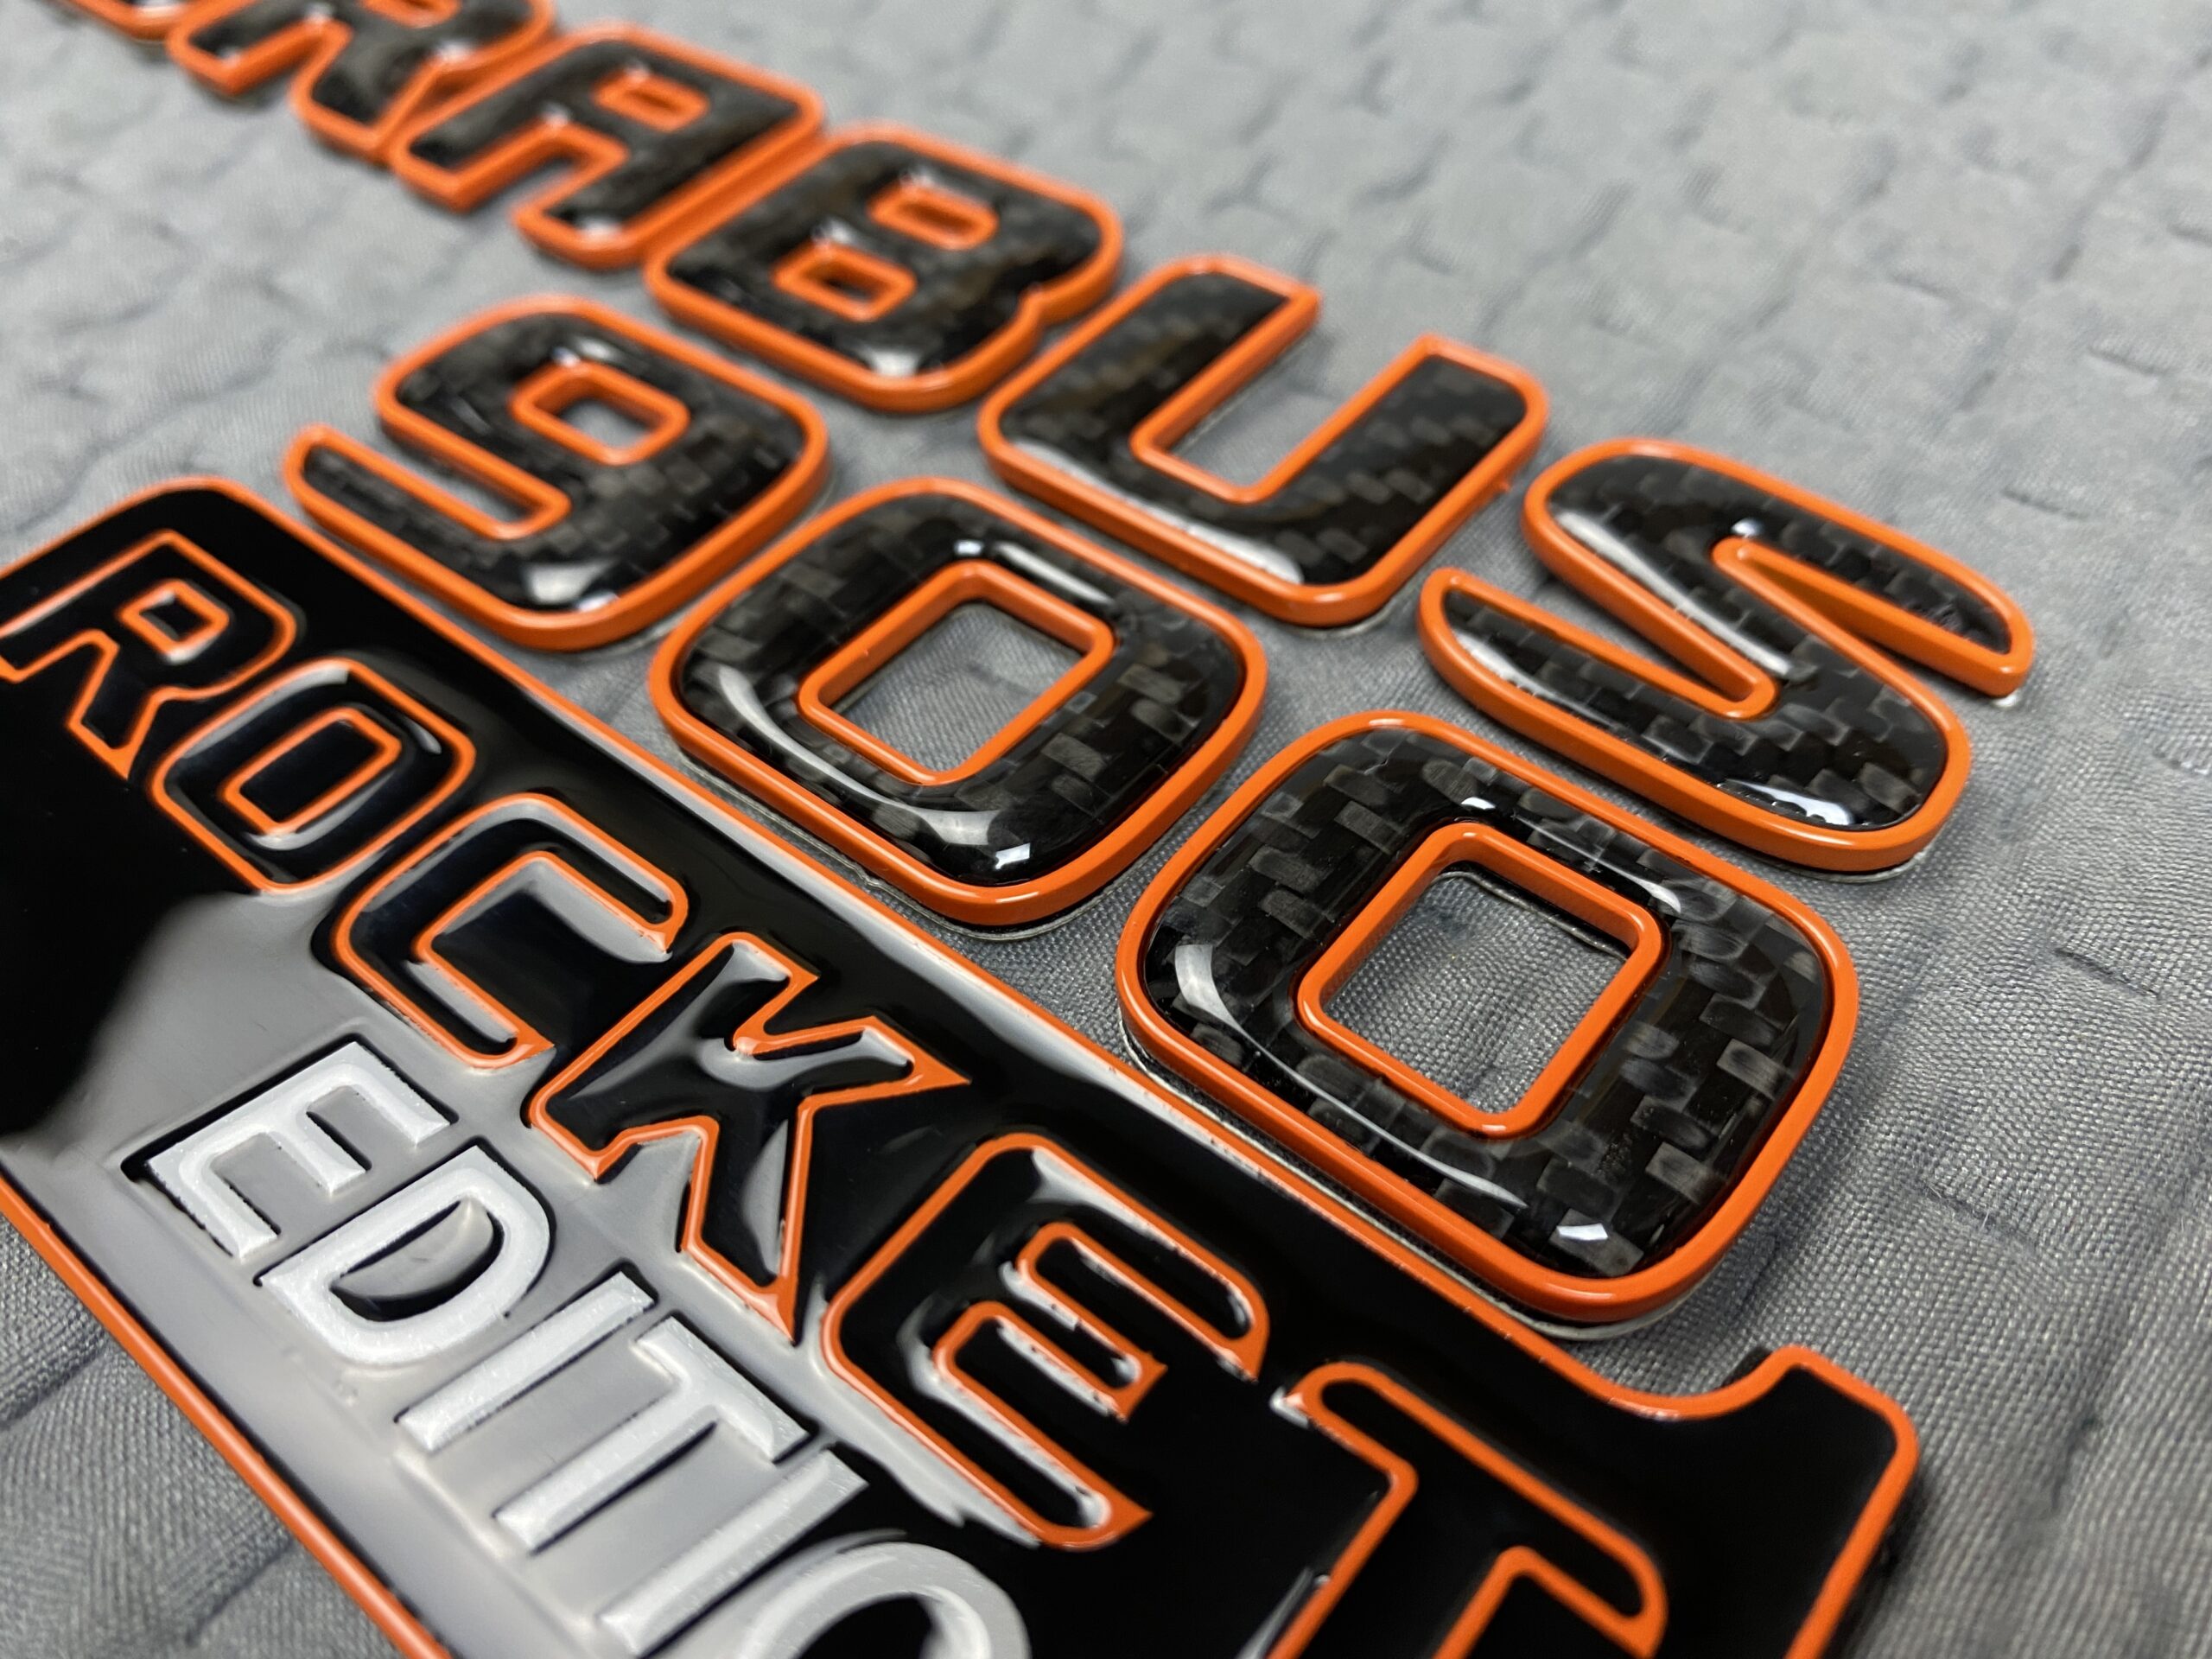 Brabus-ORANGE-badge-logo-emblem-set-for-Mercedes-Benz-W463A-W464-G-Class —  Kubay Design